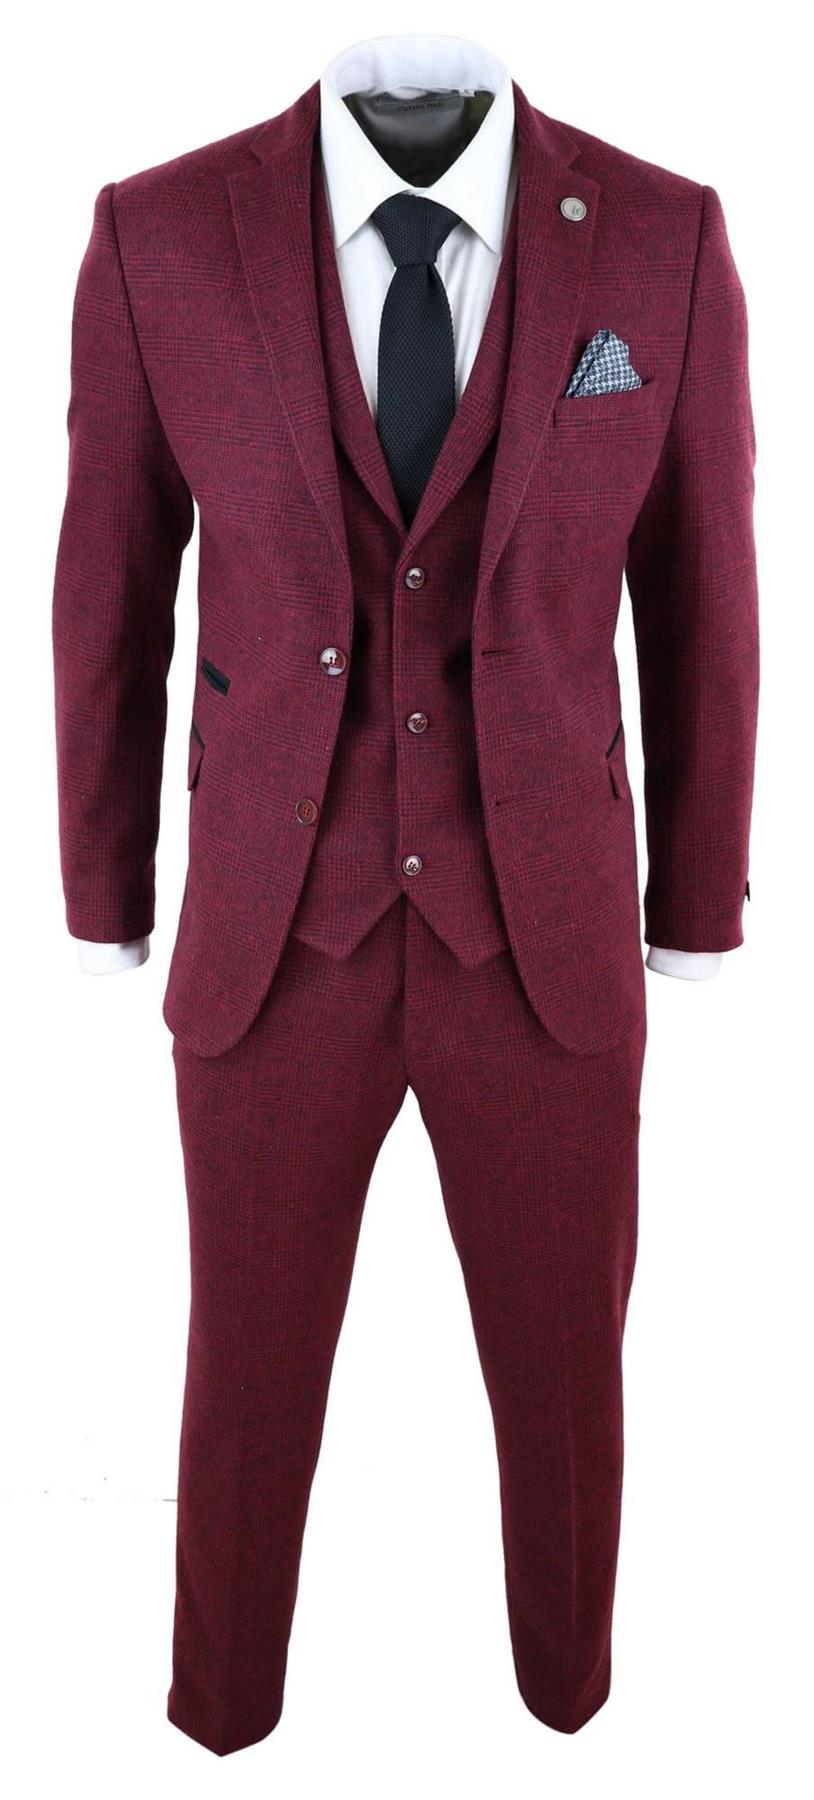 Mens 3 Piece Tweed Suit Wool Burgundy Black 1920s Authentic 1920s Blinders Suit Retro Classic